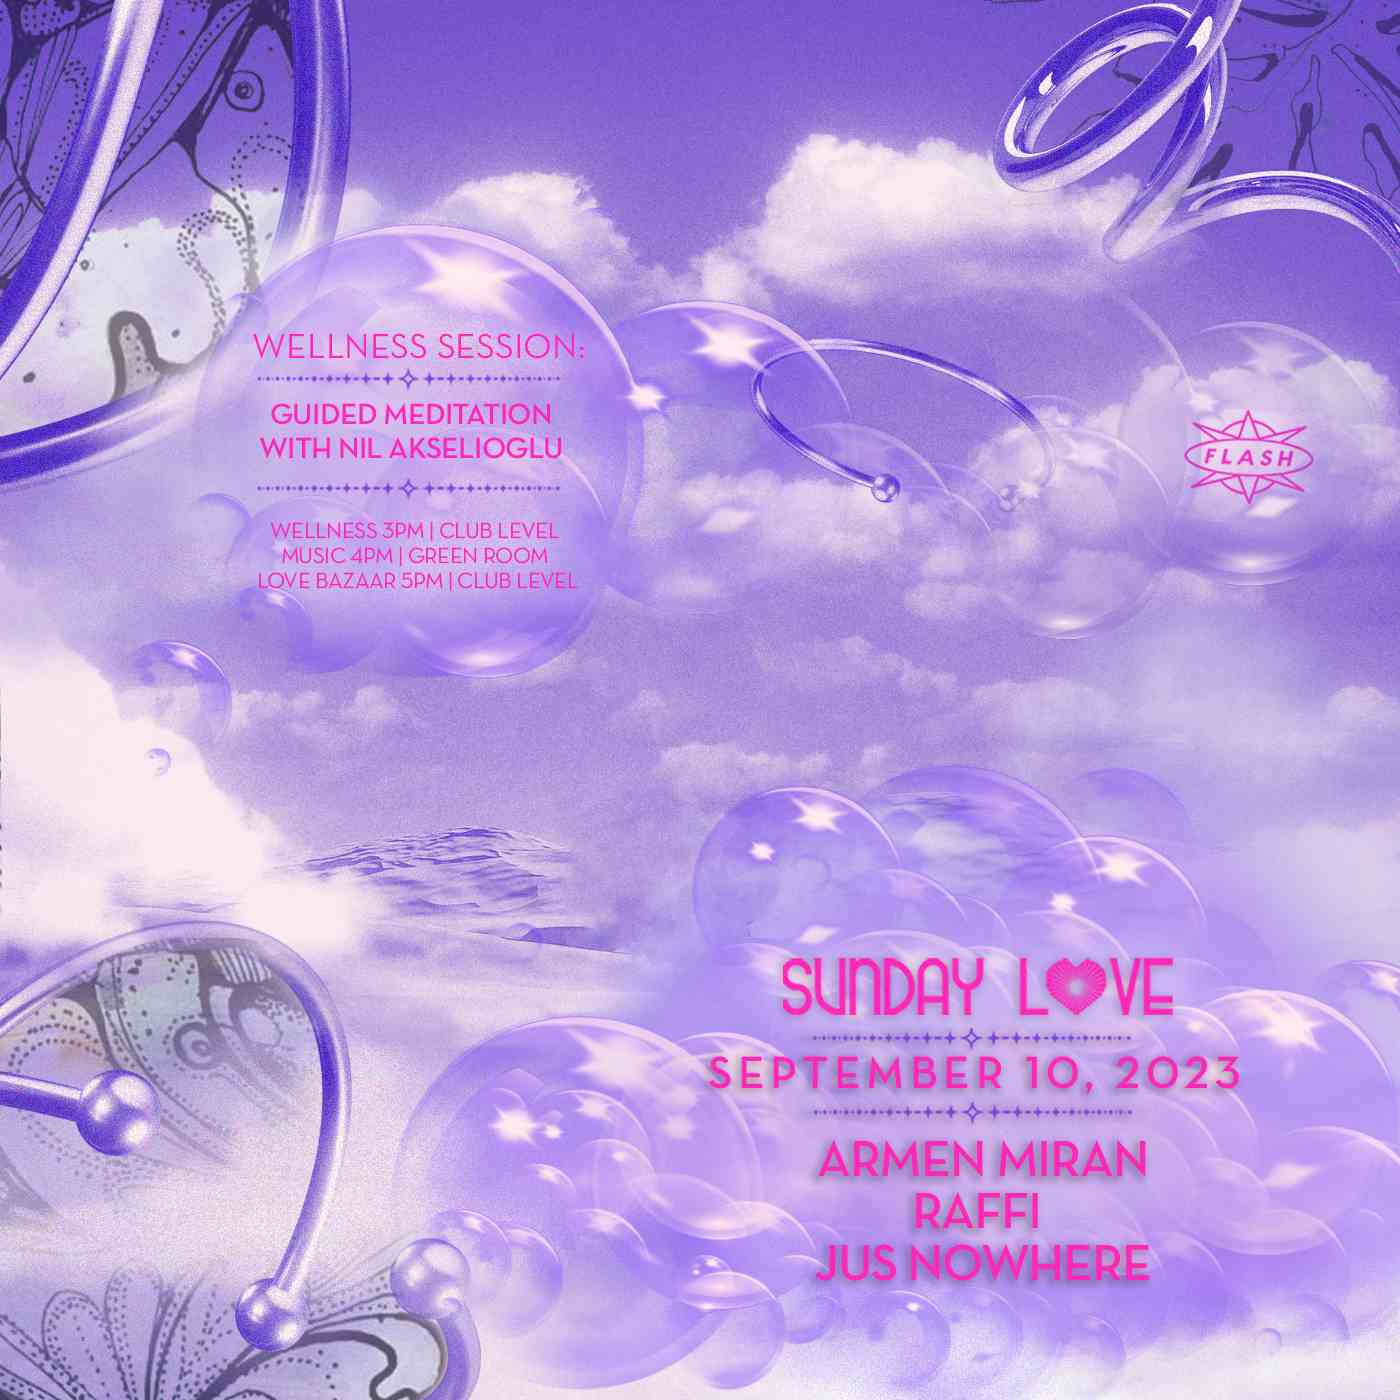 Sunday Love: Armen Miran - Raffi - Jus Nowhere event flyer